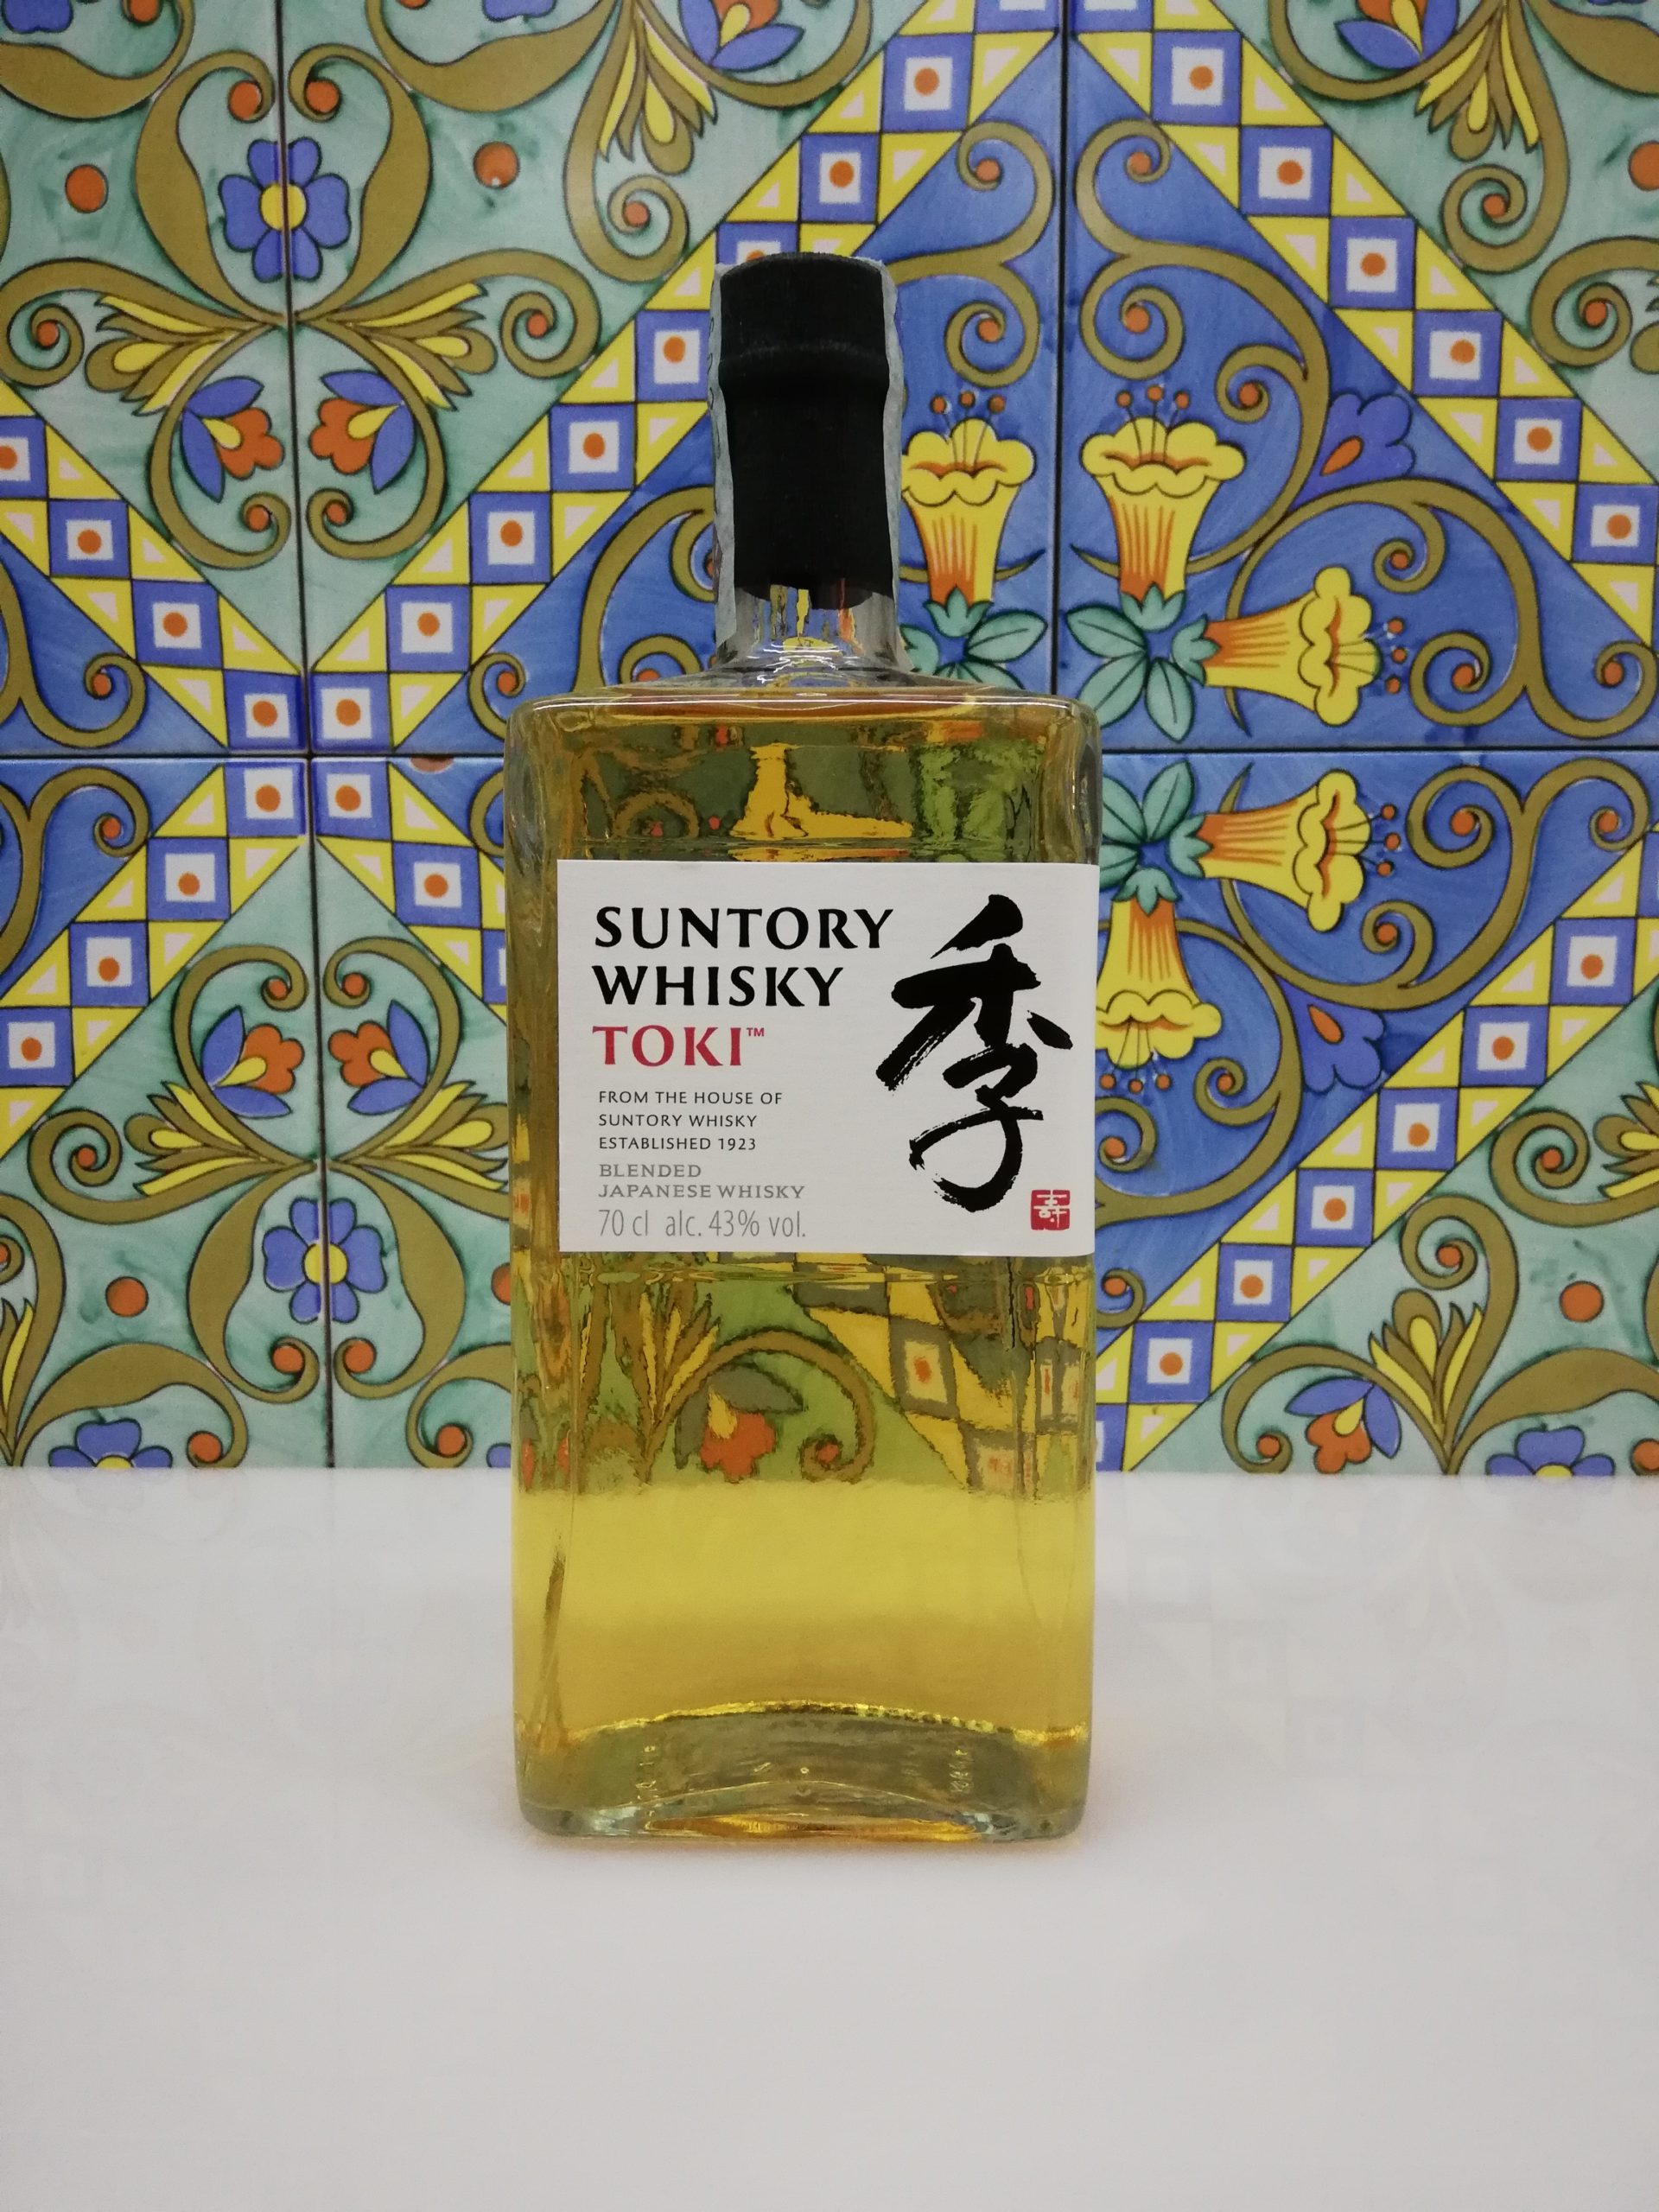 Whisky Toki Suntory Blended Japanese cl 70 vol 43% - Maeba Single Cask